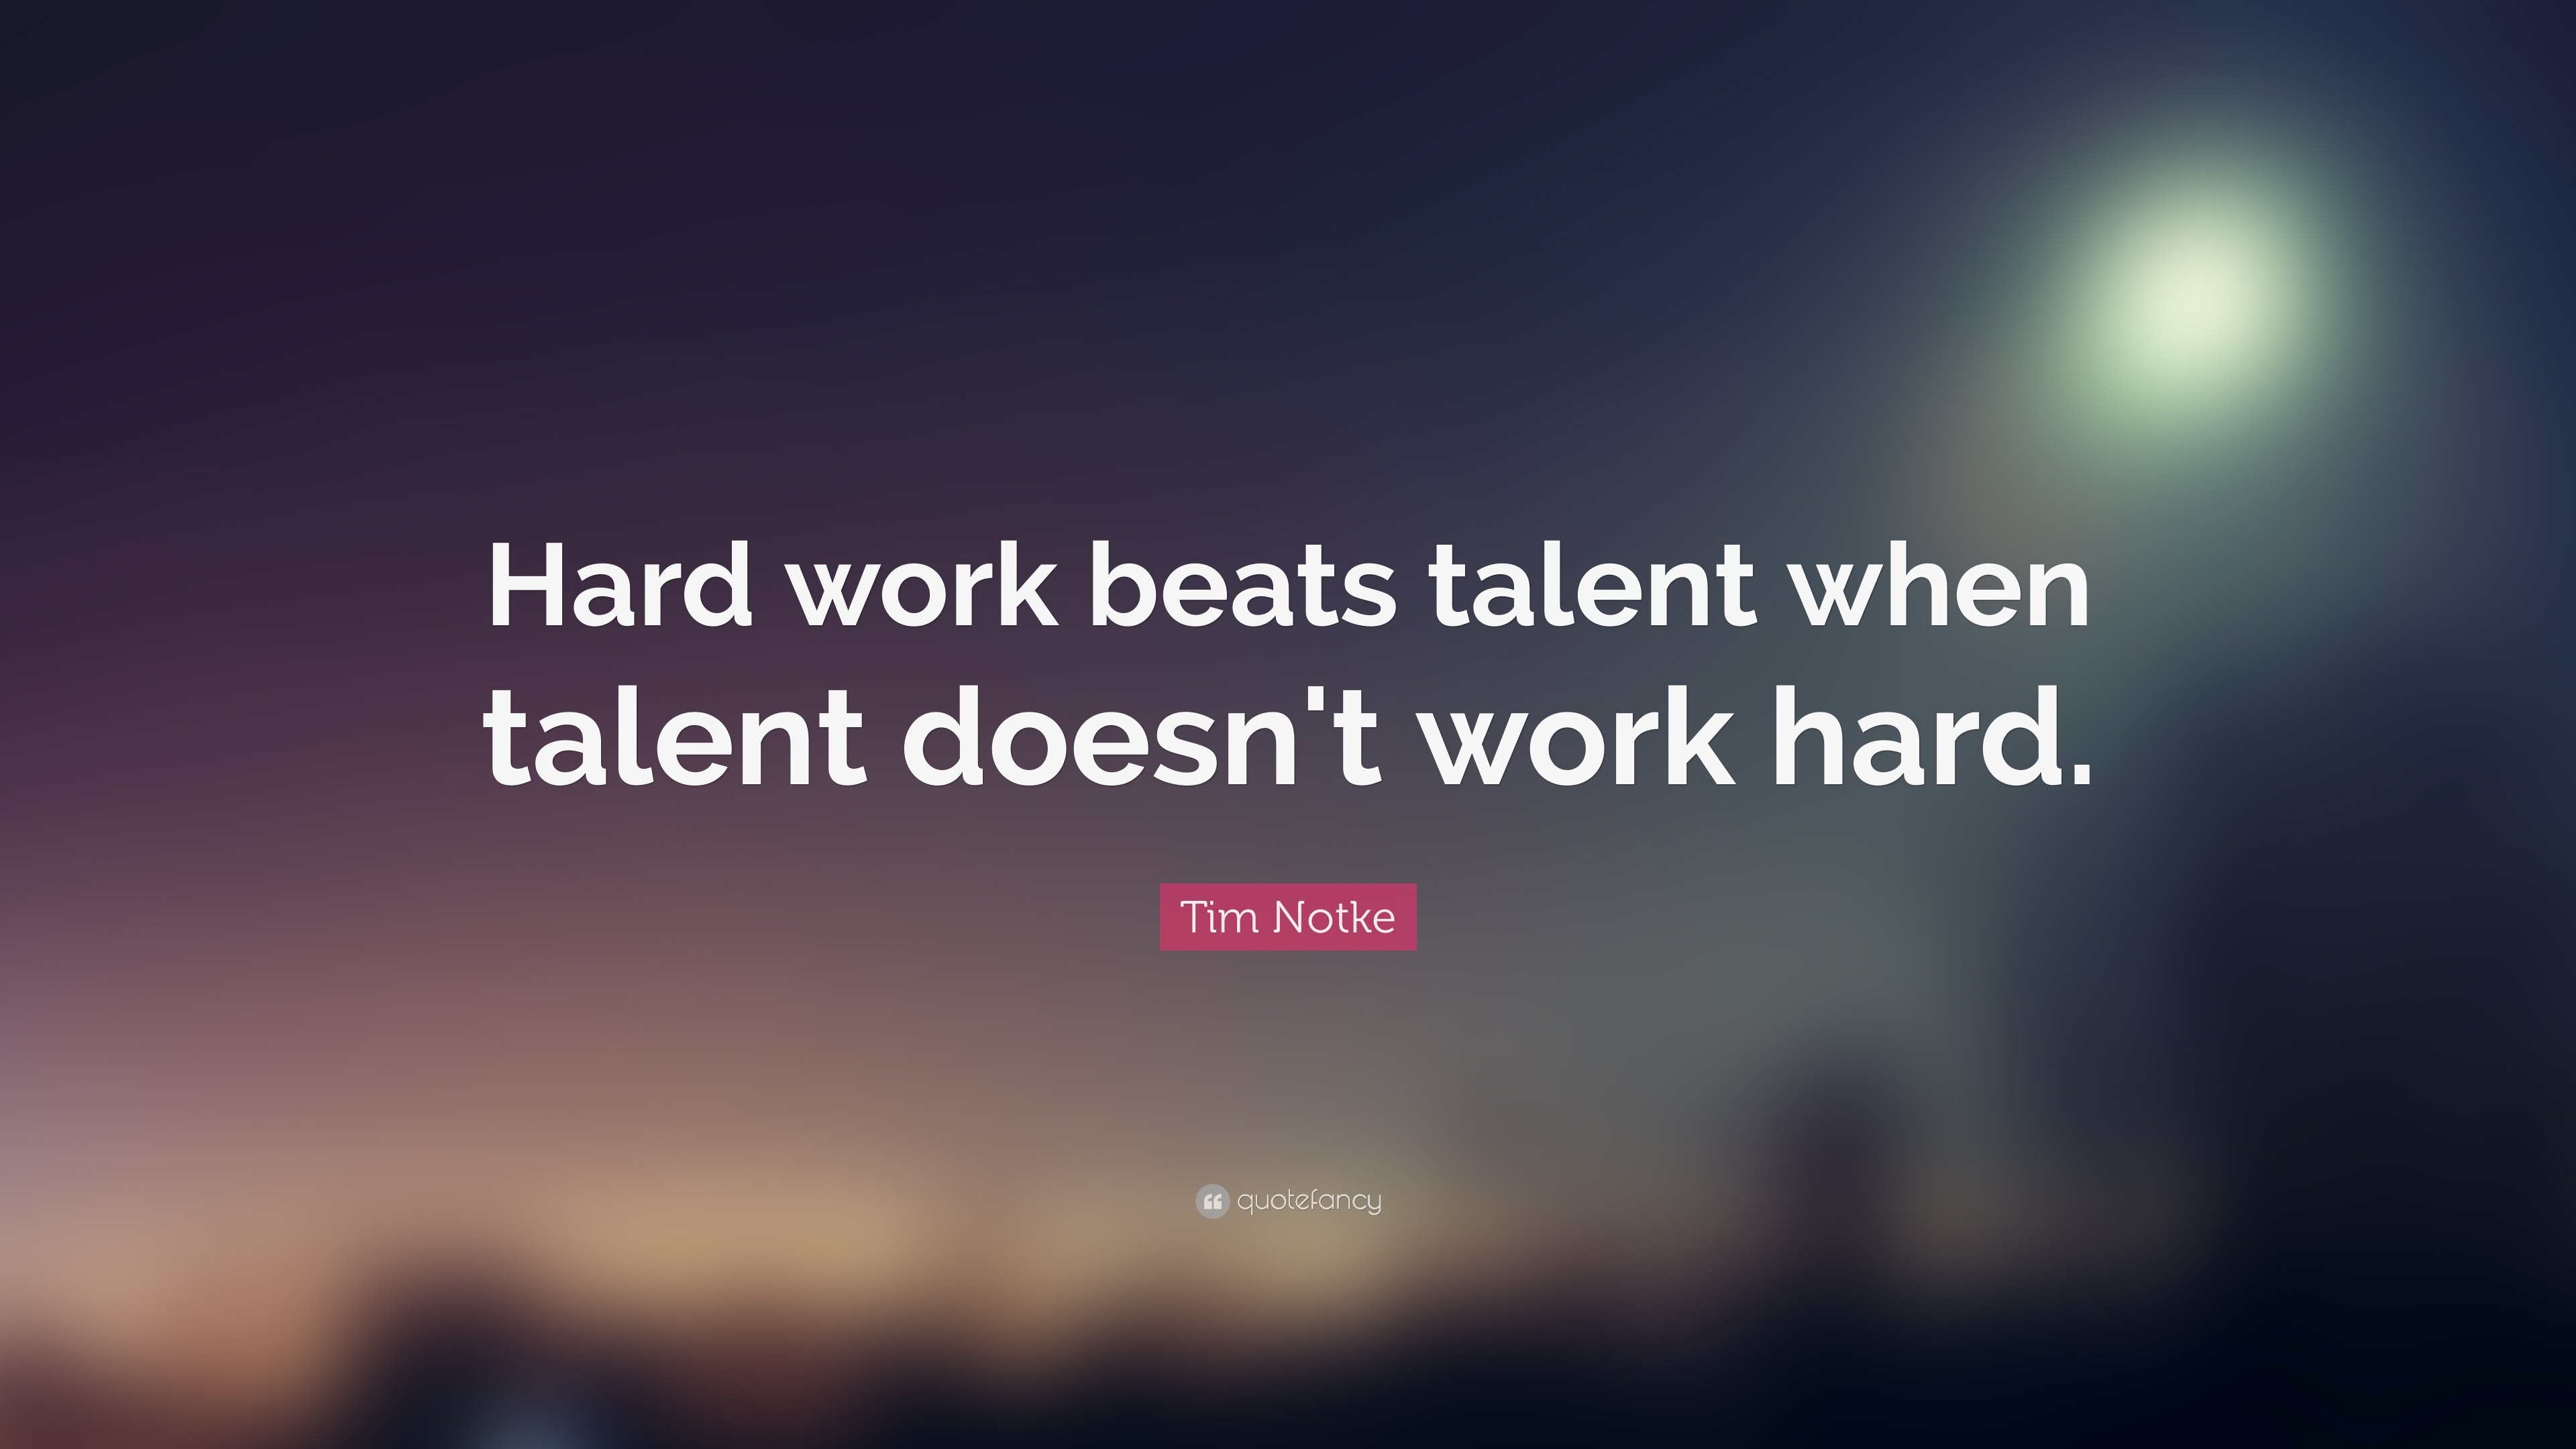 261 Hard Work Beats Talent Images, Stock Photos & Vectors | Shutterstock